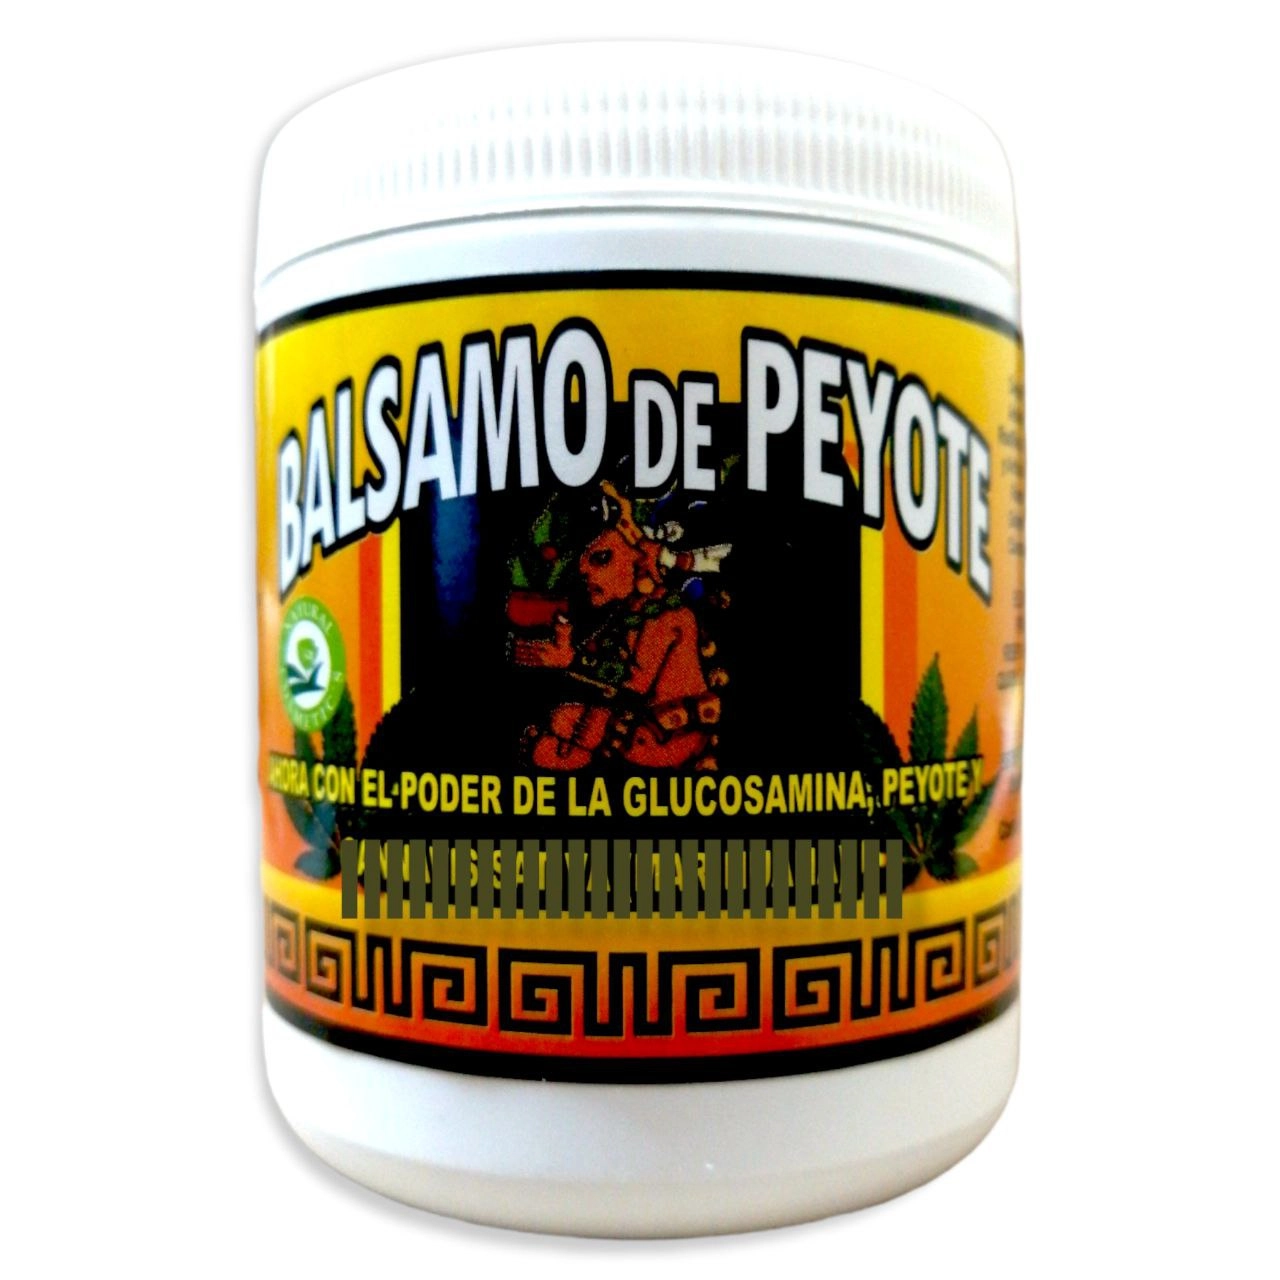 Balsamo de peyote 300grs - Natural cosmetics, Foto 3 Mayoreo Naturista